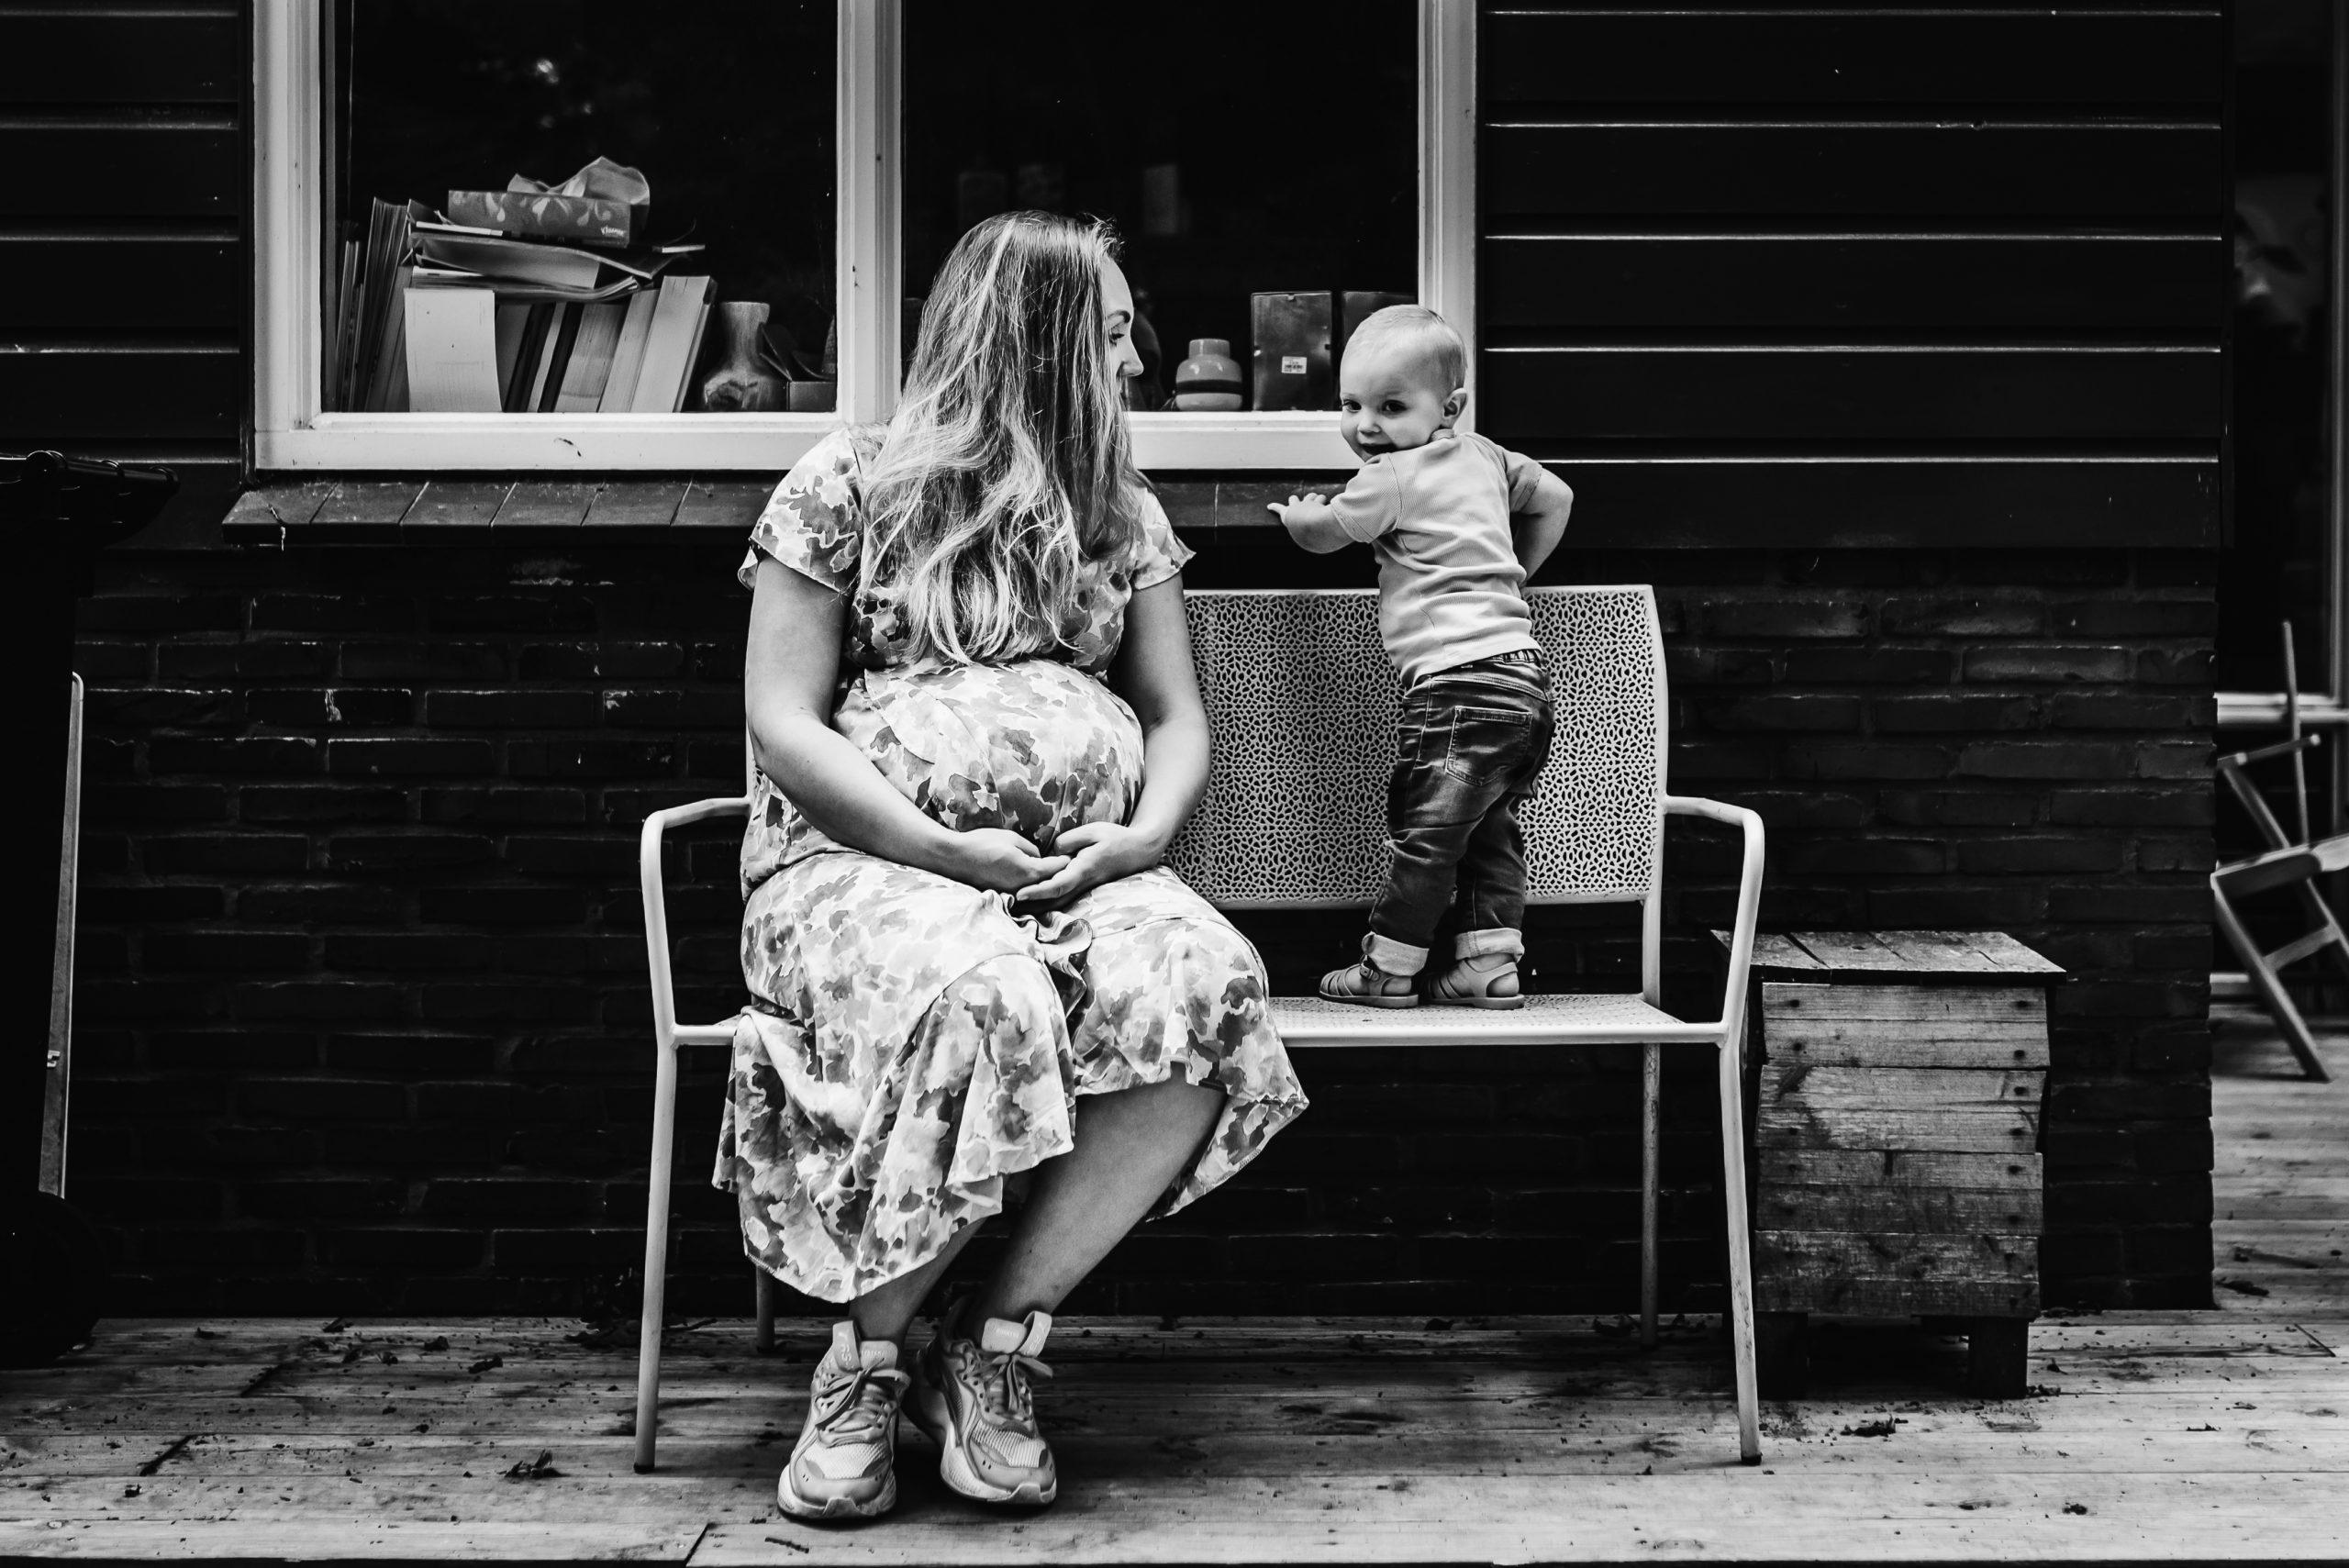 Day in the life zwangerschap, gezinsfotografie, echte momenten thuis vastleggen